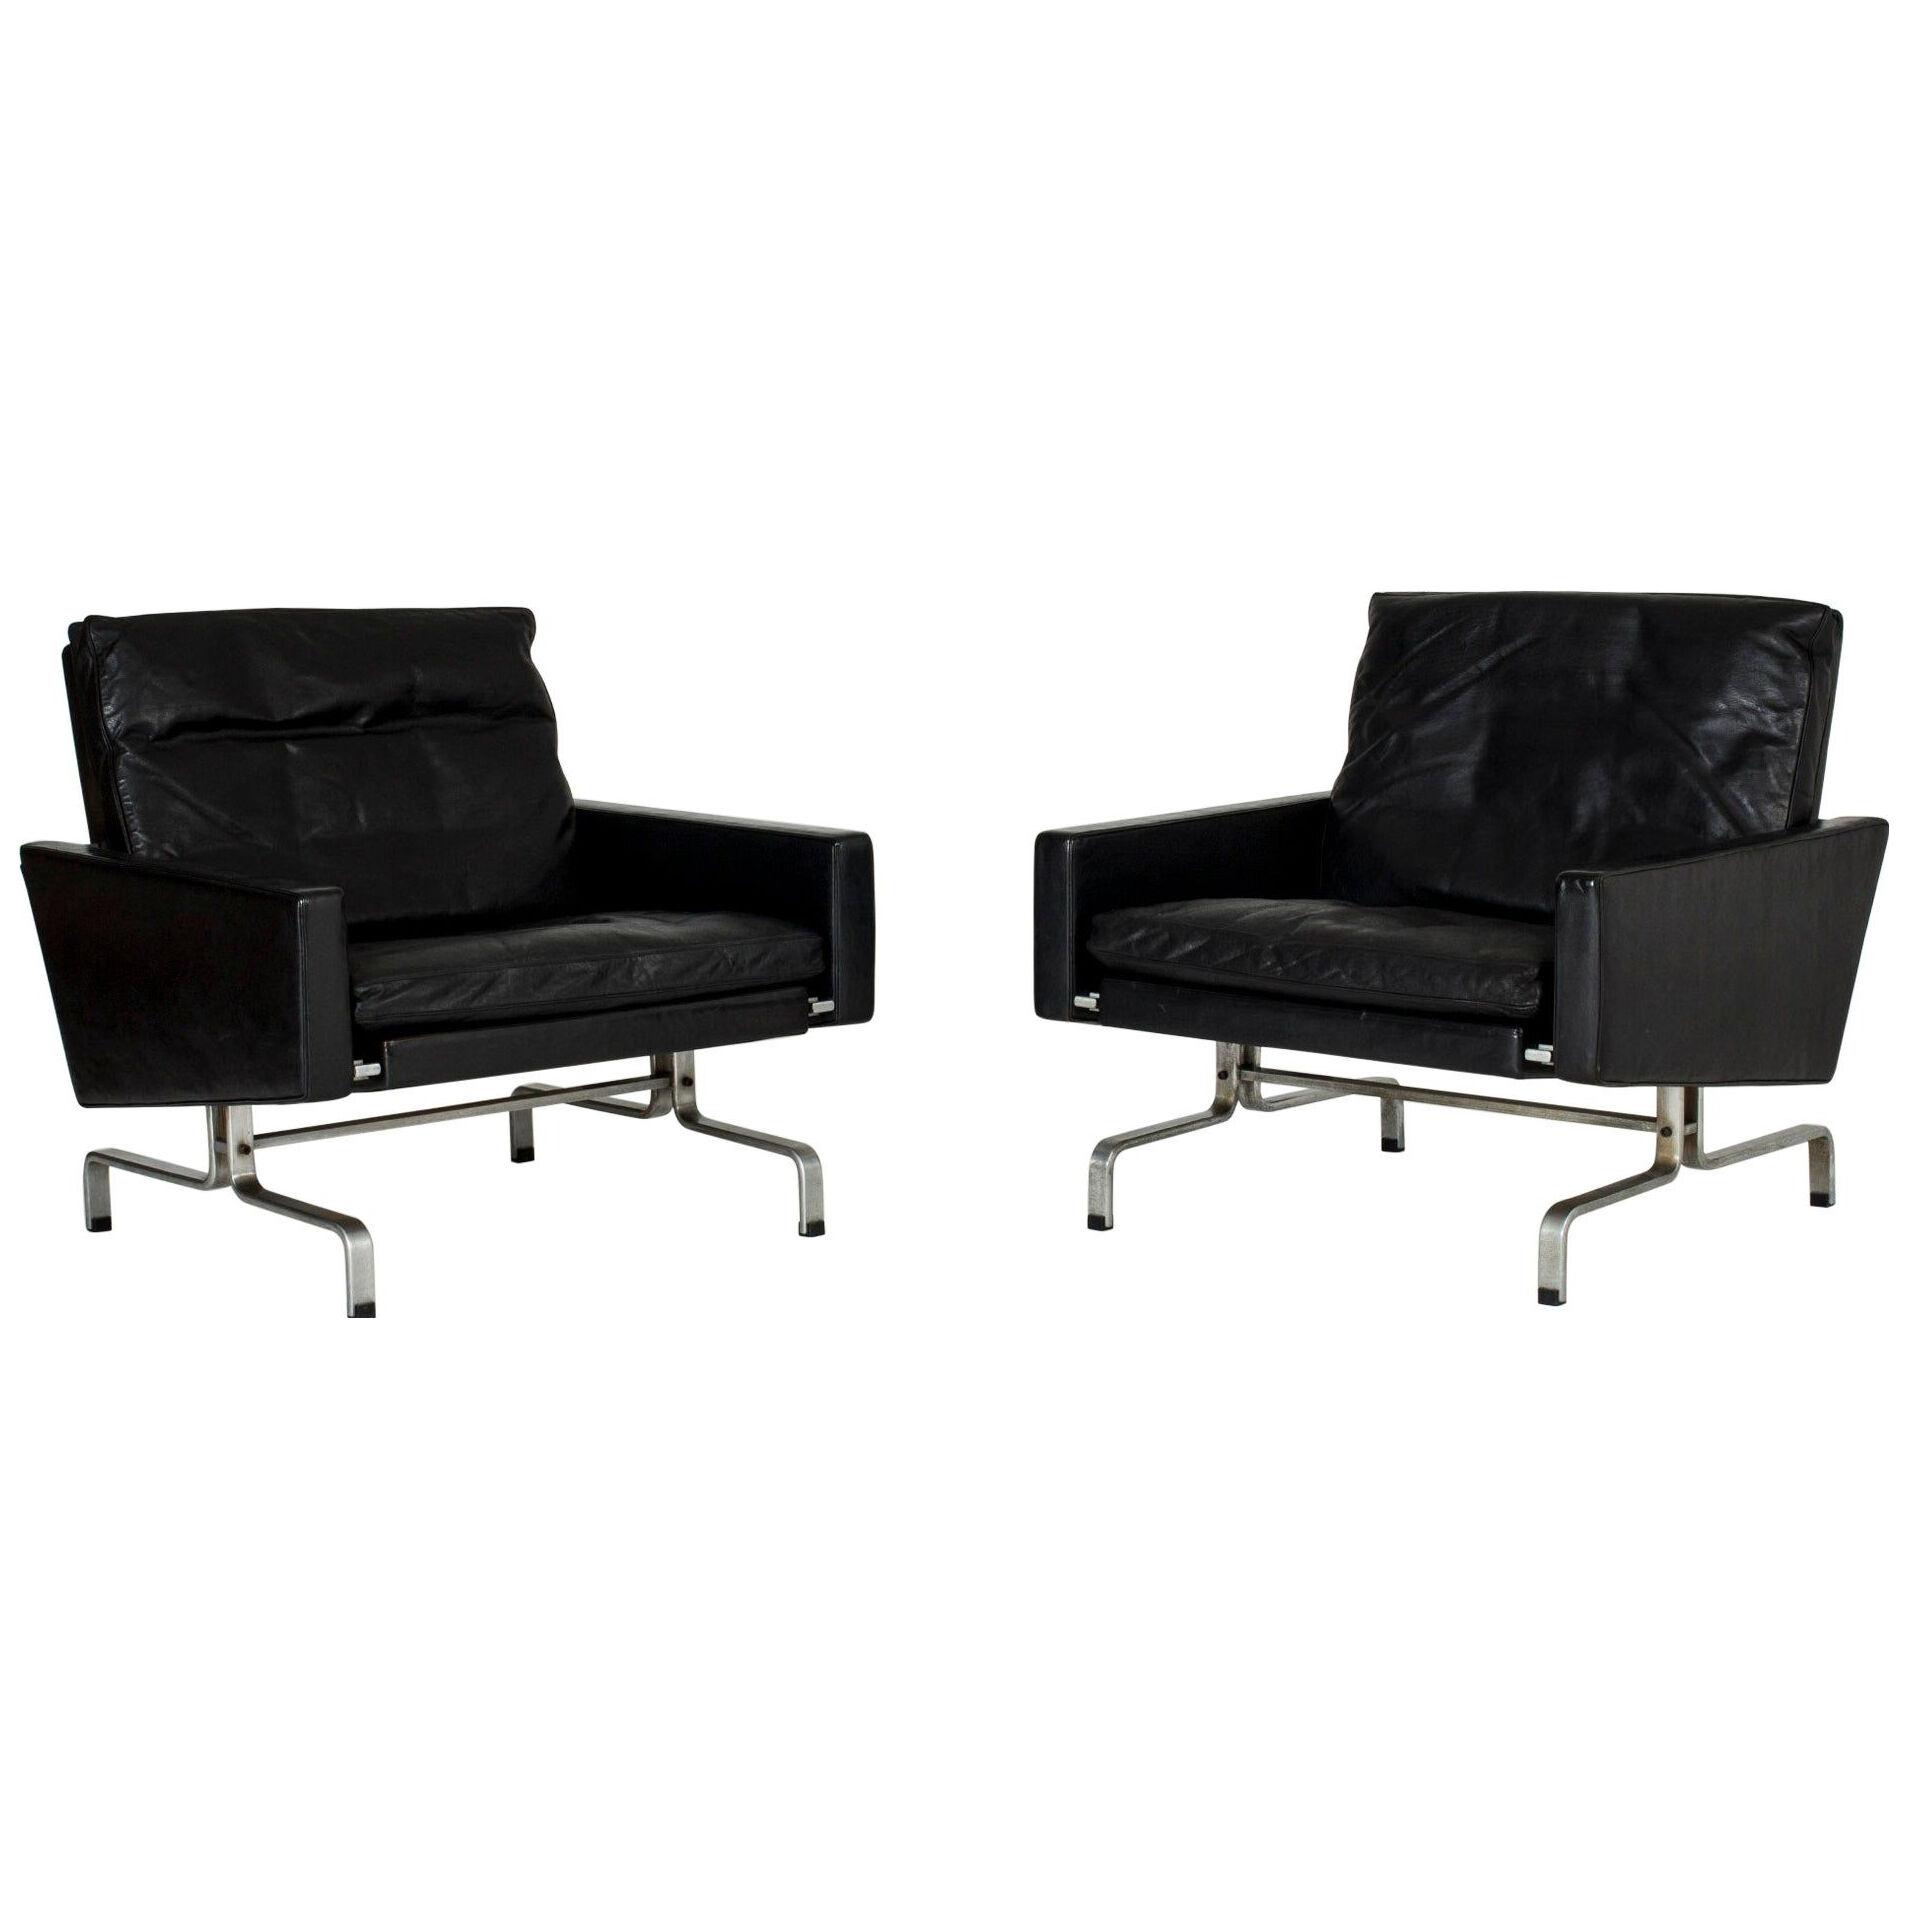 Pair of “PK 31” Lounge Chairs by Poul Kjærholm for E. Kold Christensen